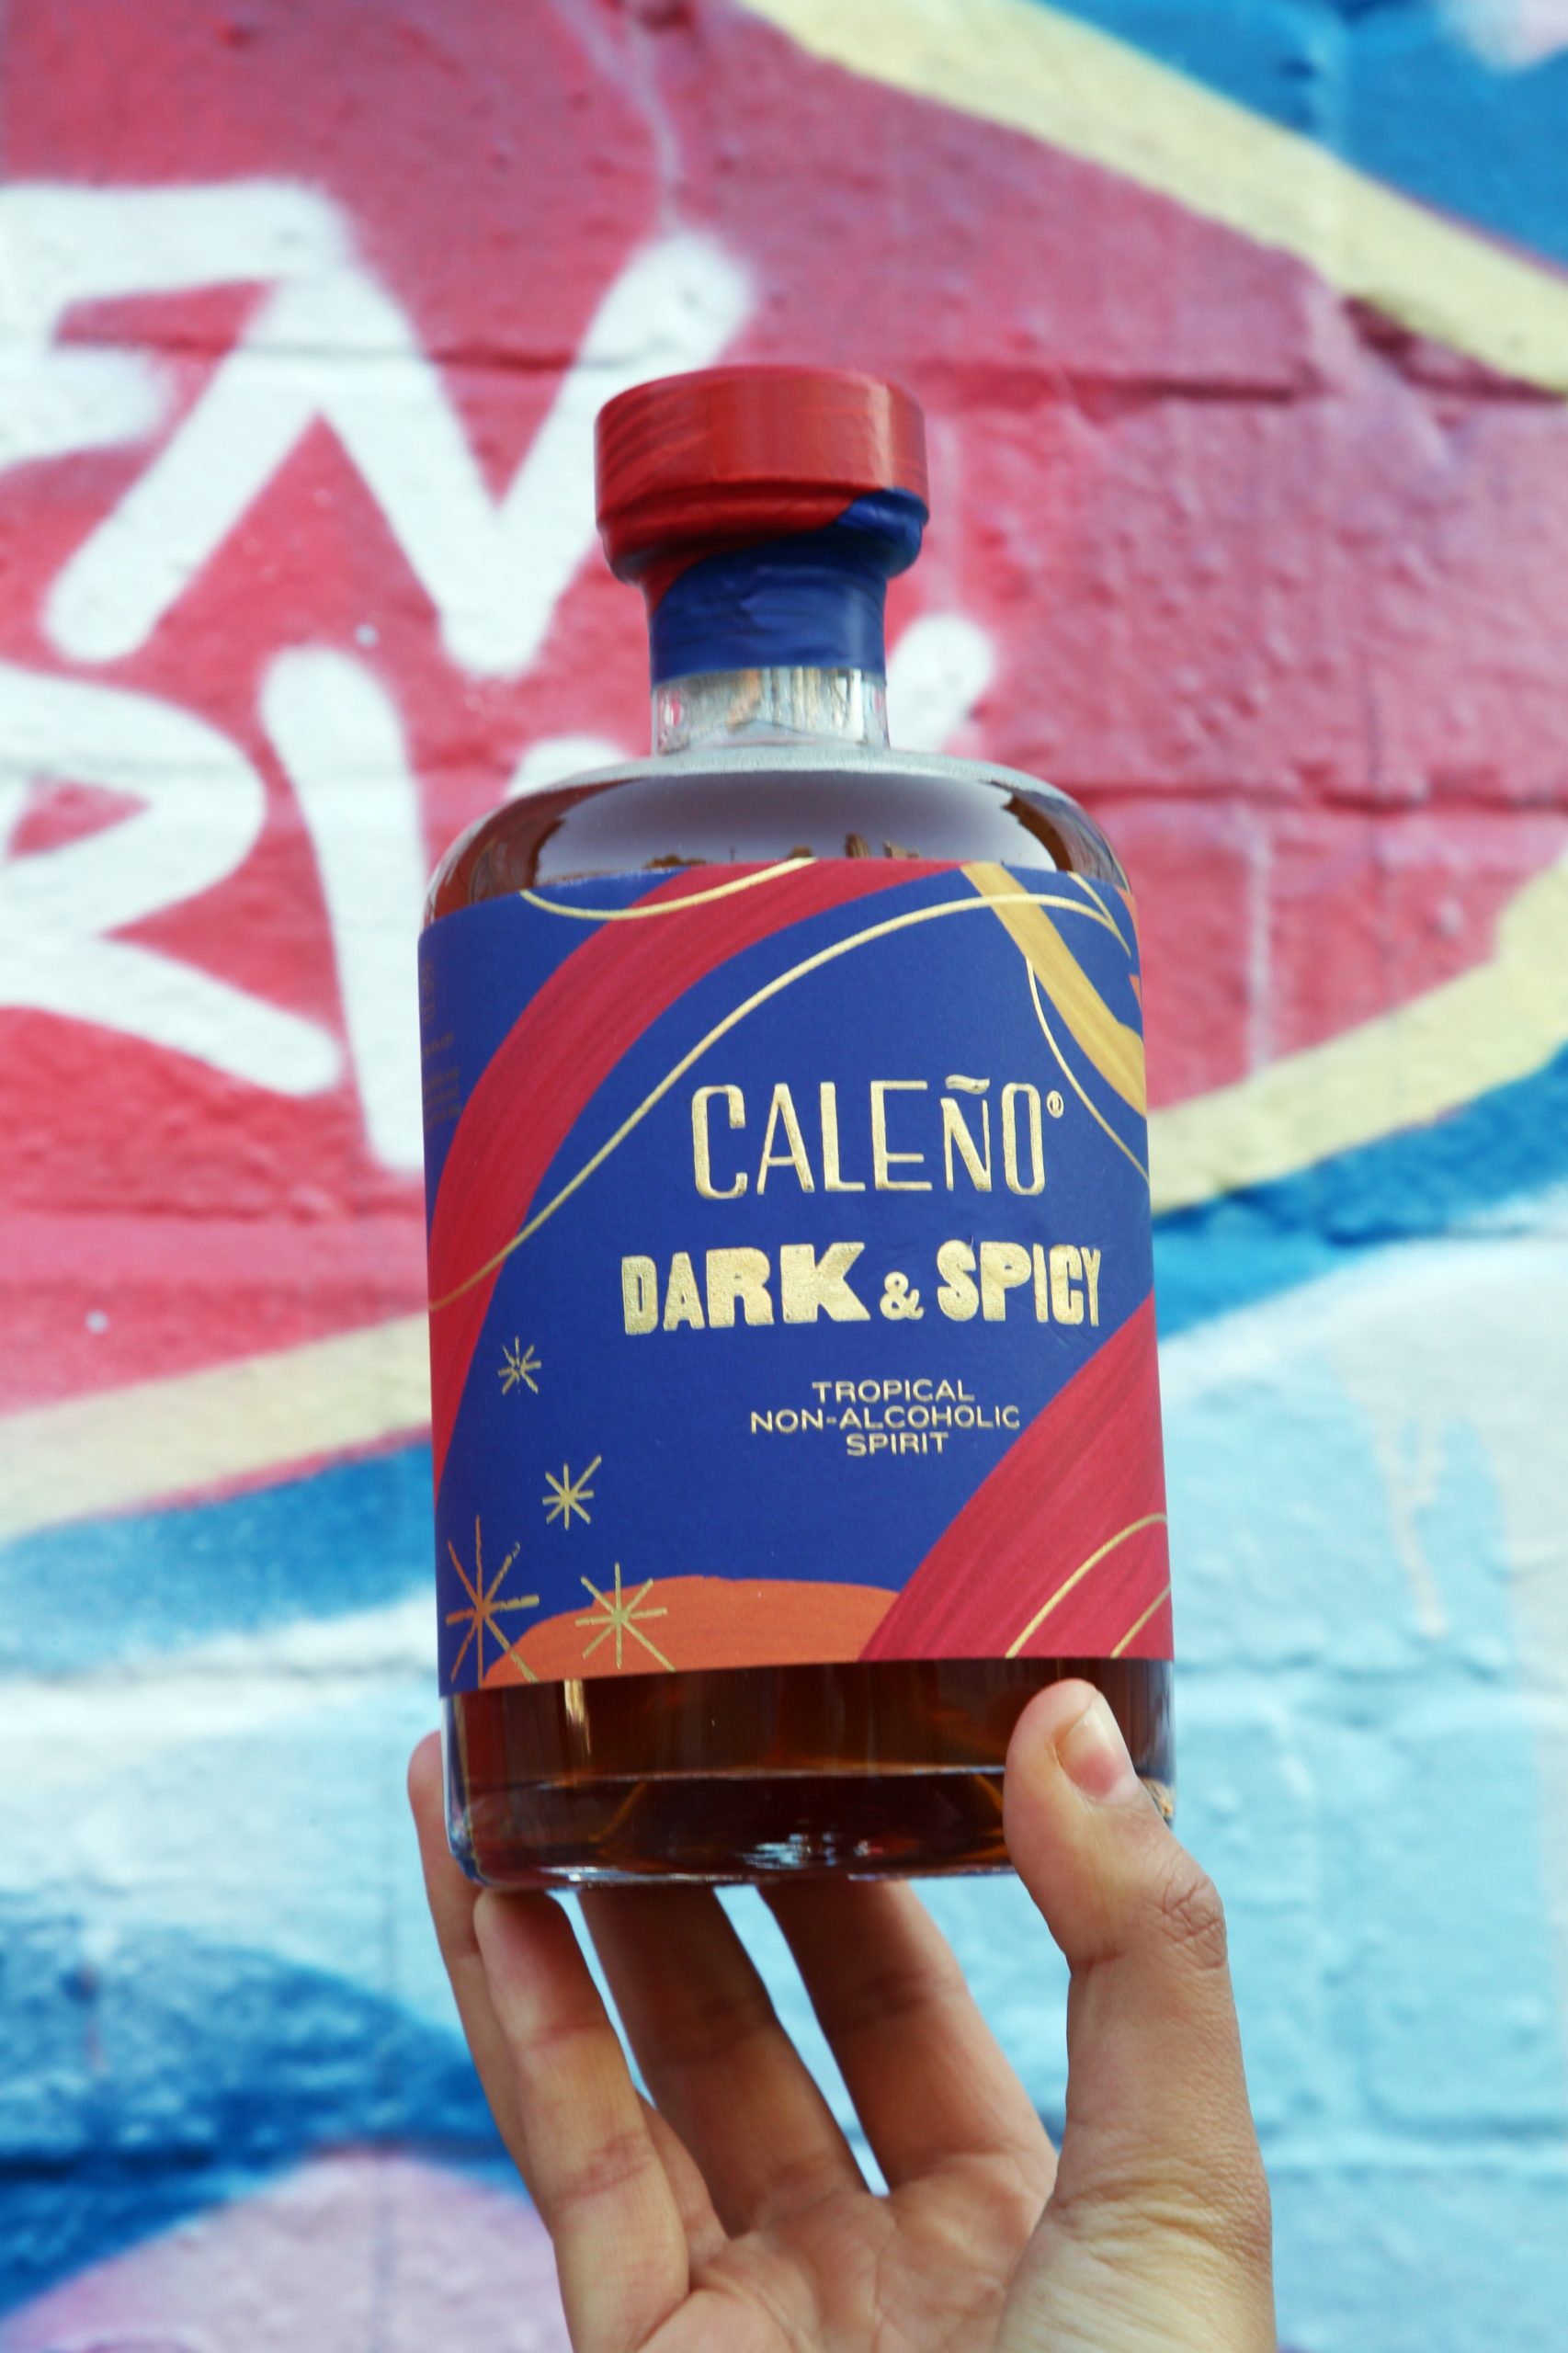 <img src="caleno.jpg" alt="caleno dark and spicy rum alternative"/> 